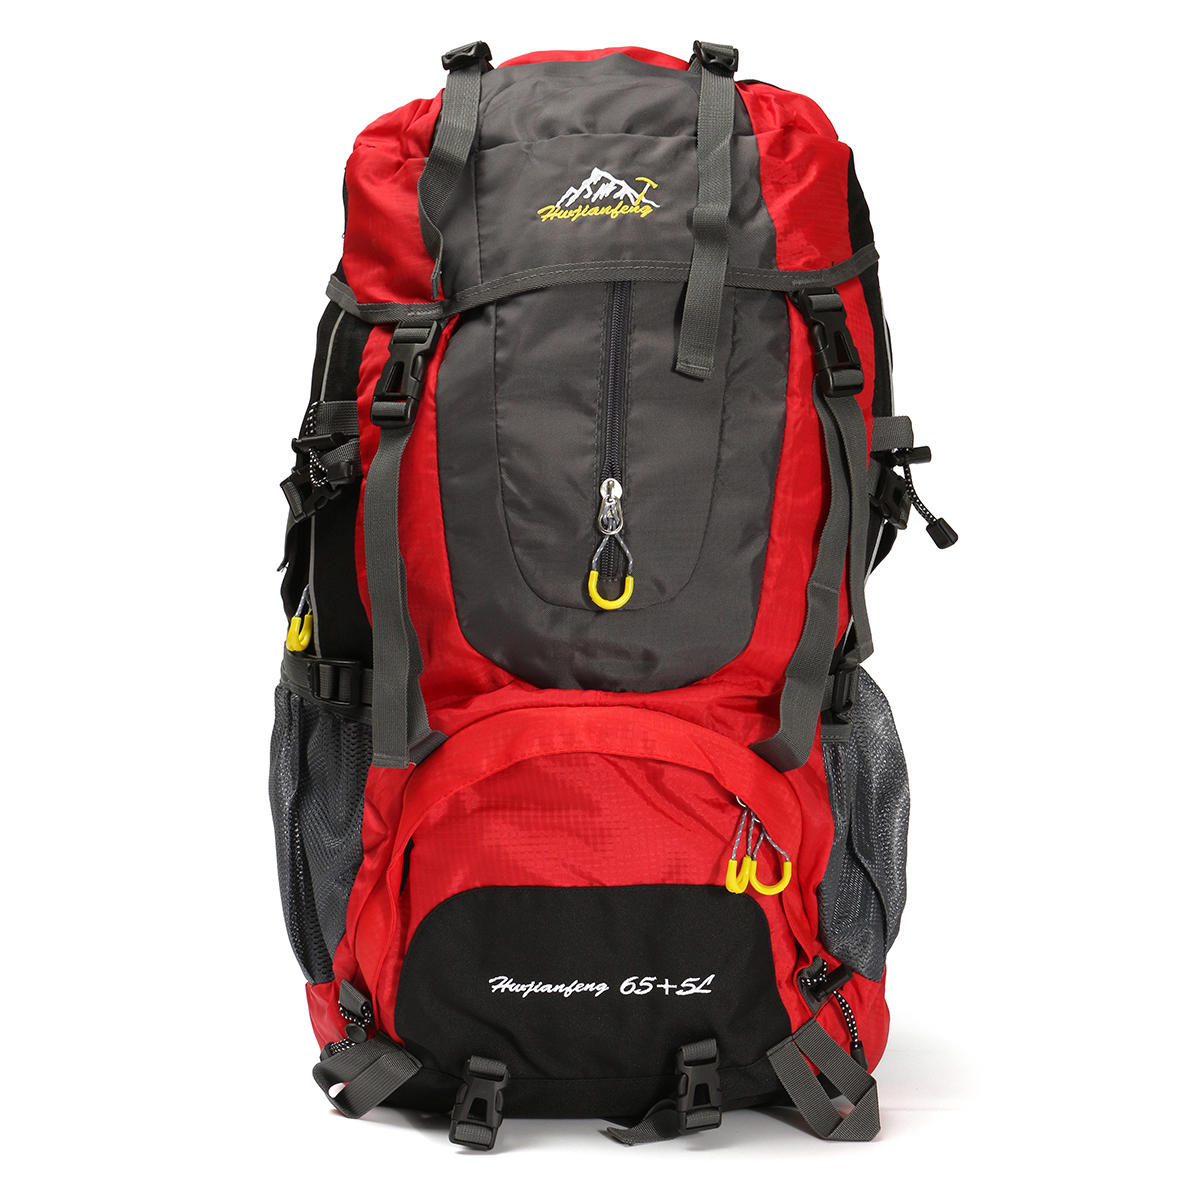 Outdoor 70l waterproof rucksack backpack camping hiking trekking travel ...